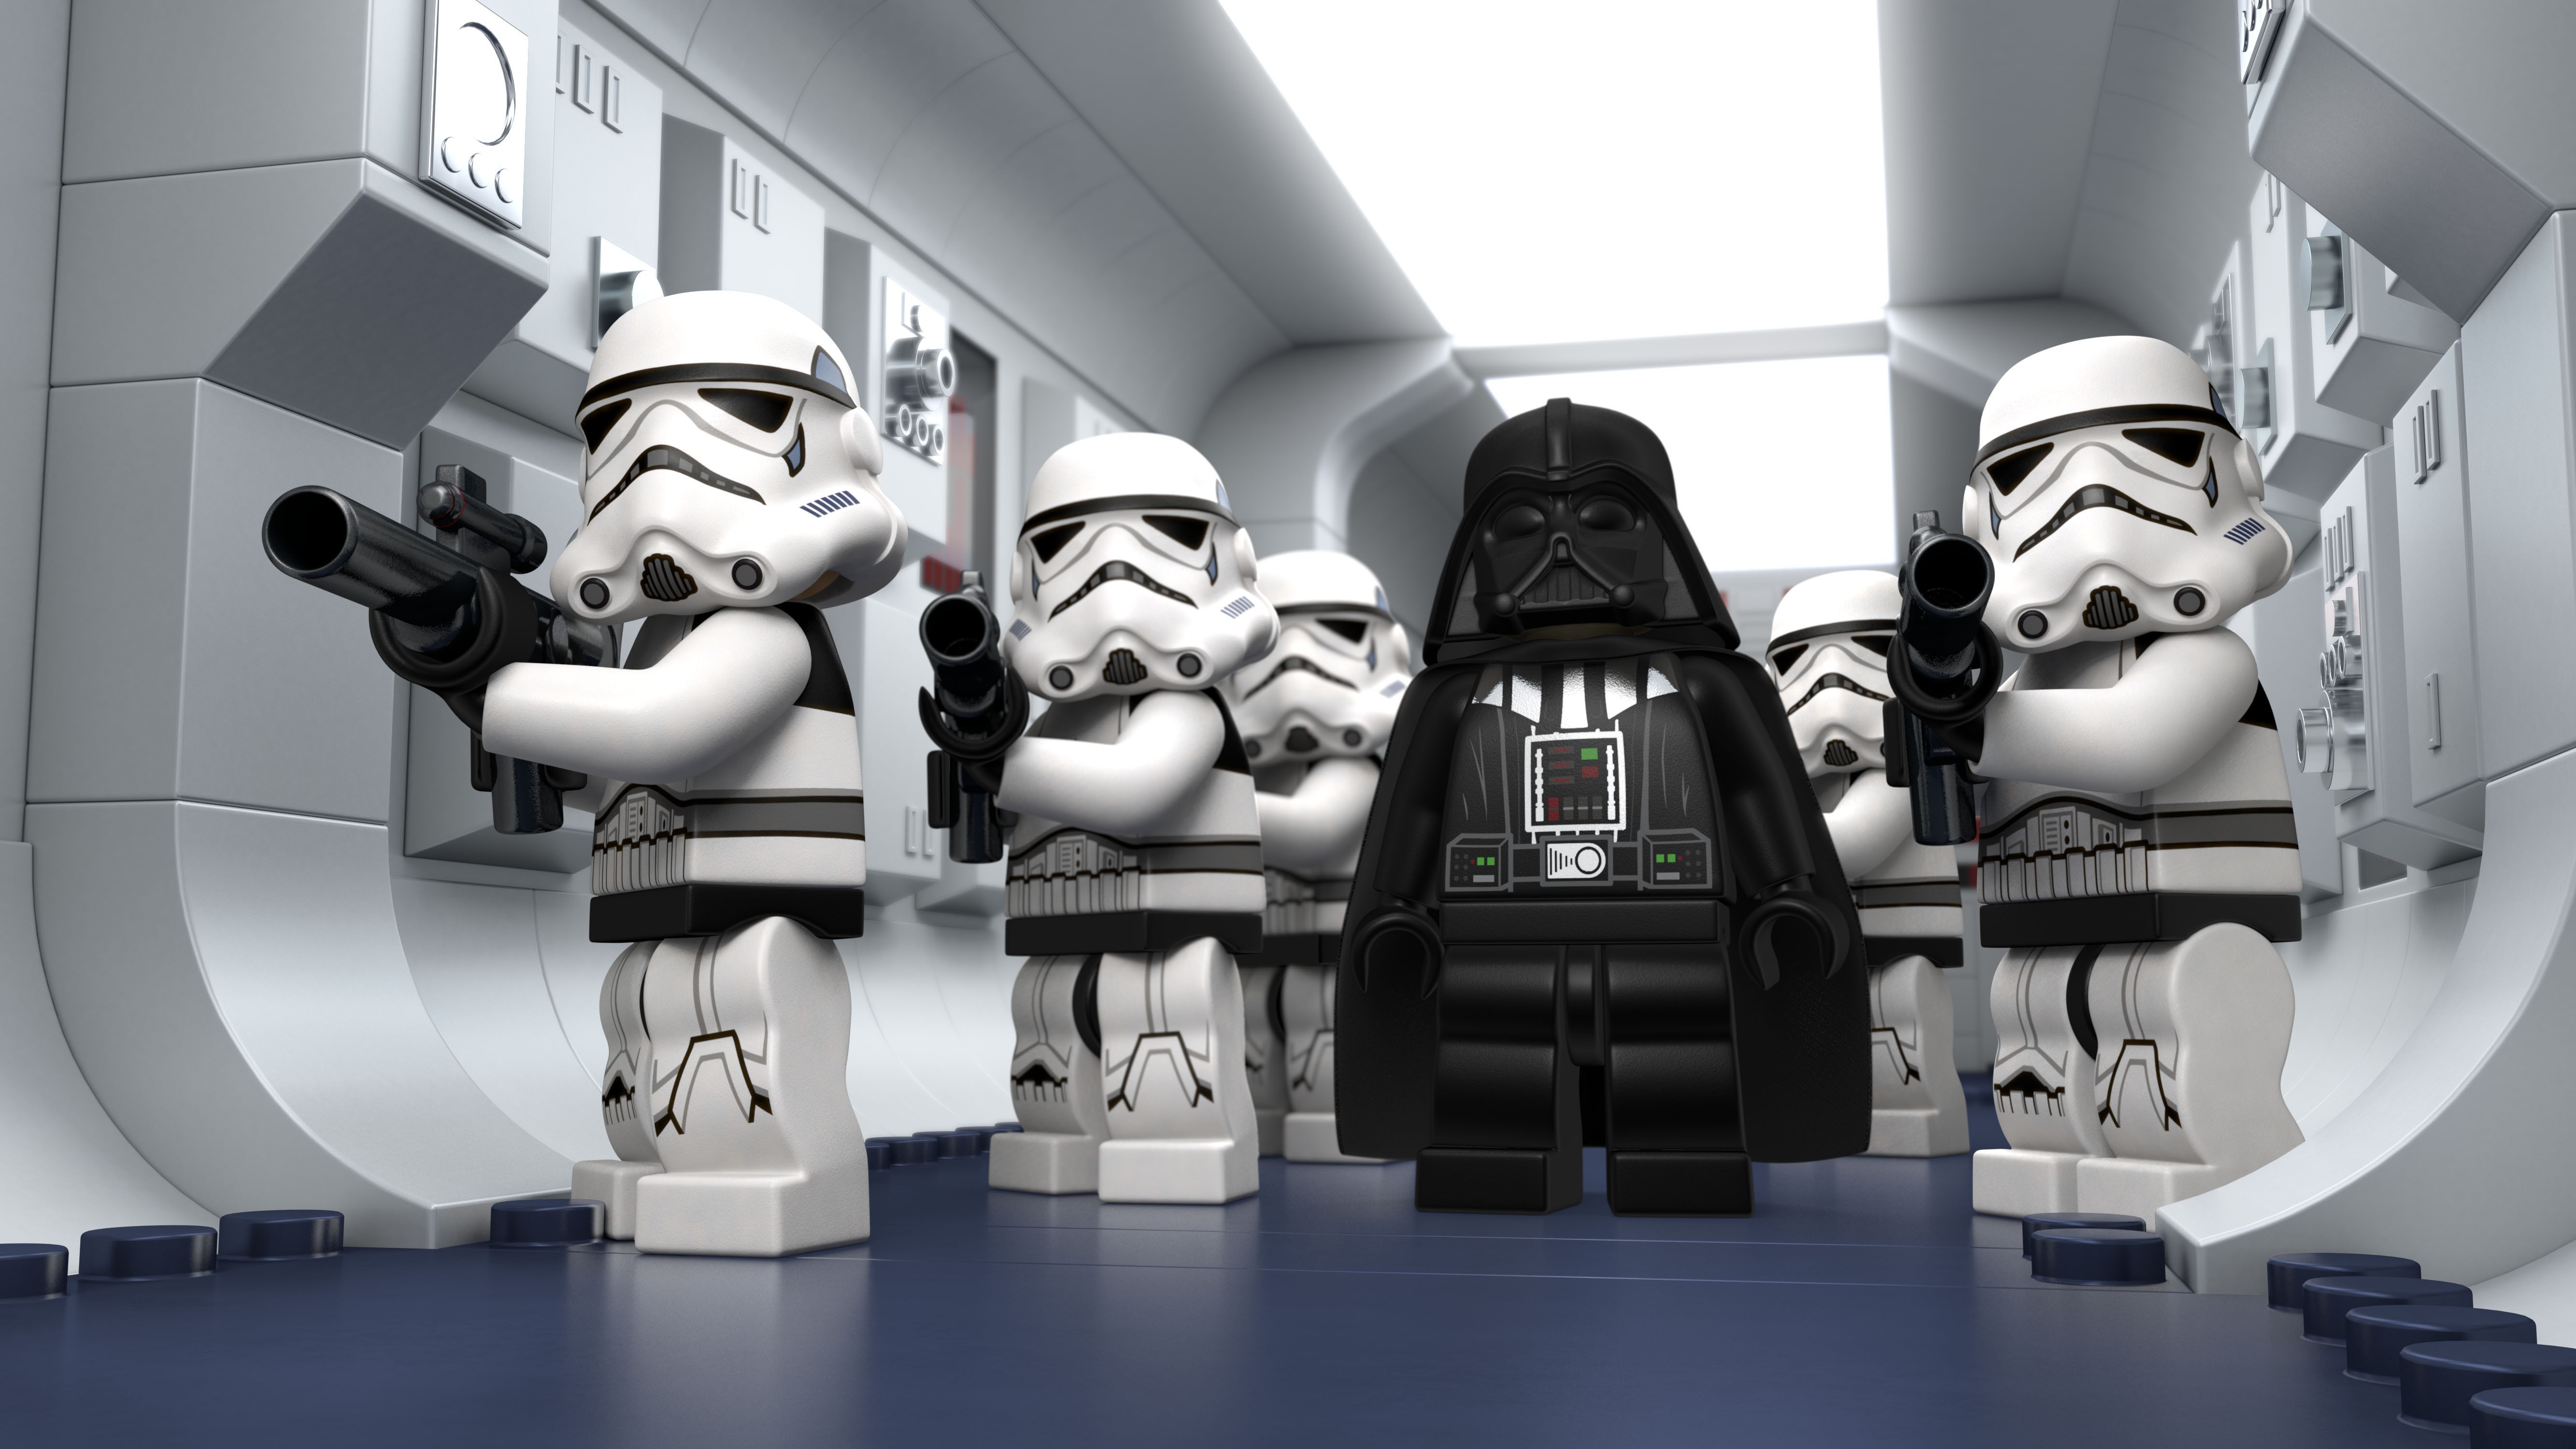 Star Wars LEGO Star Wars Darth Vader Stormtrooper Render CGi Sith LEGO 3D Digital Art Galactic Empir 5333x3000